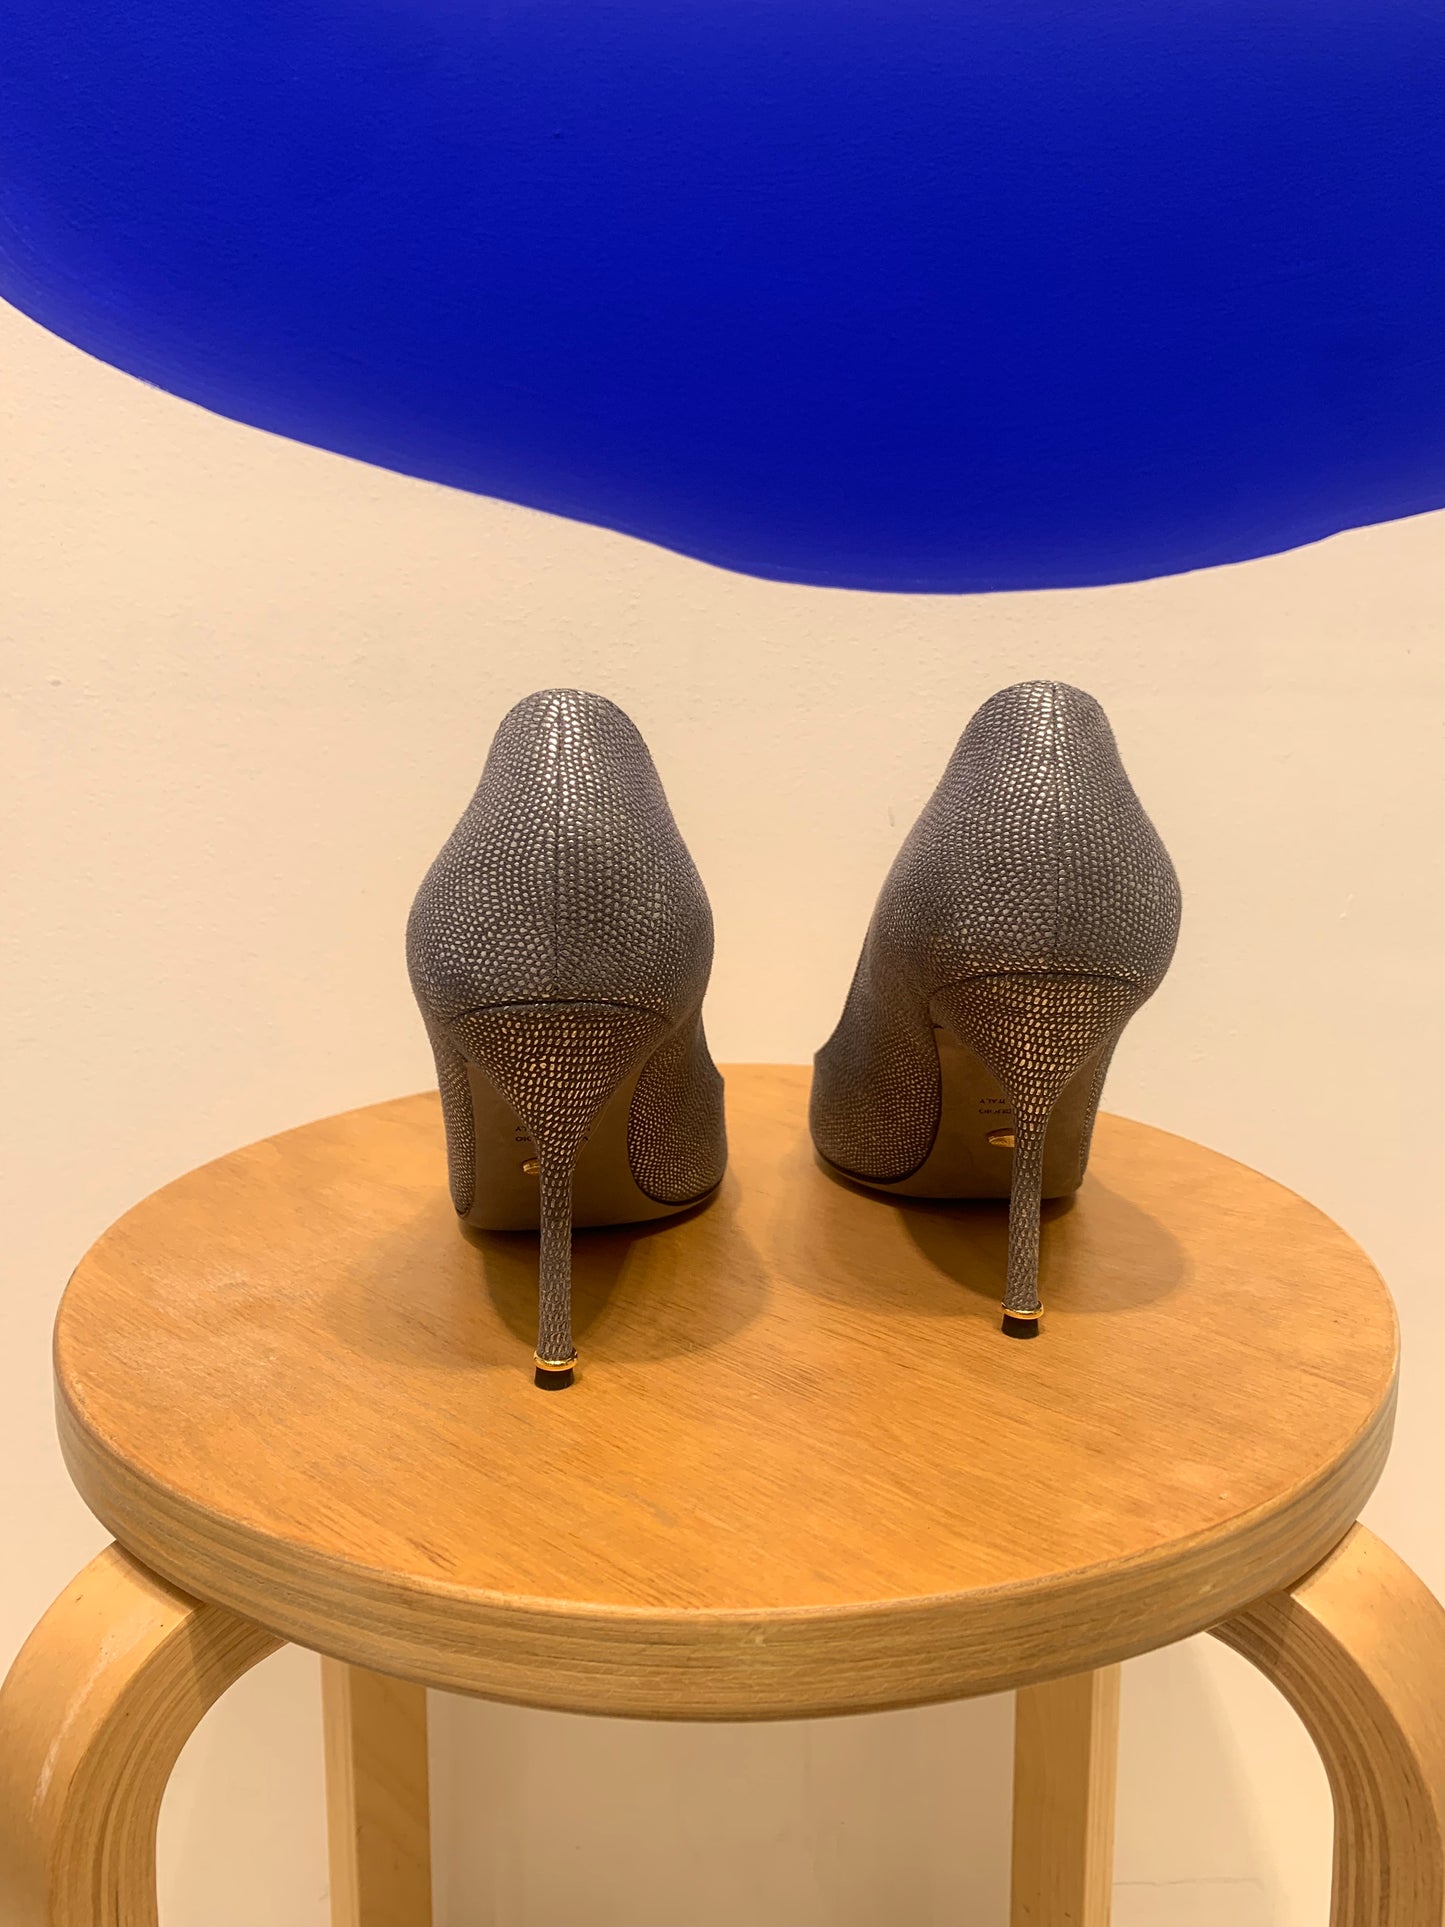 Sergio Rossi - Silver open toe leather heels